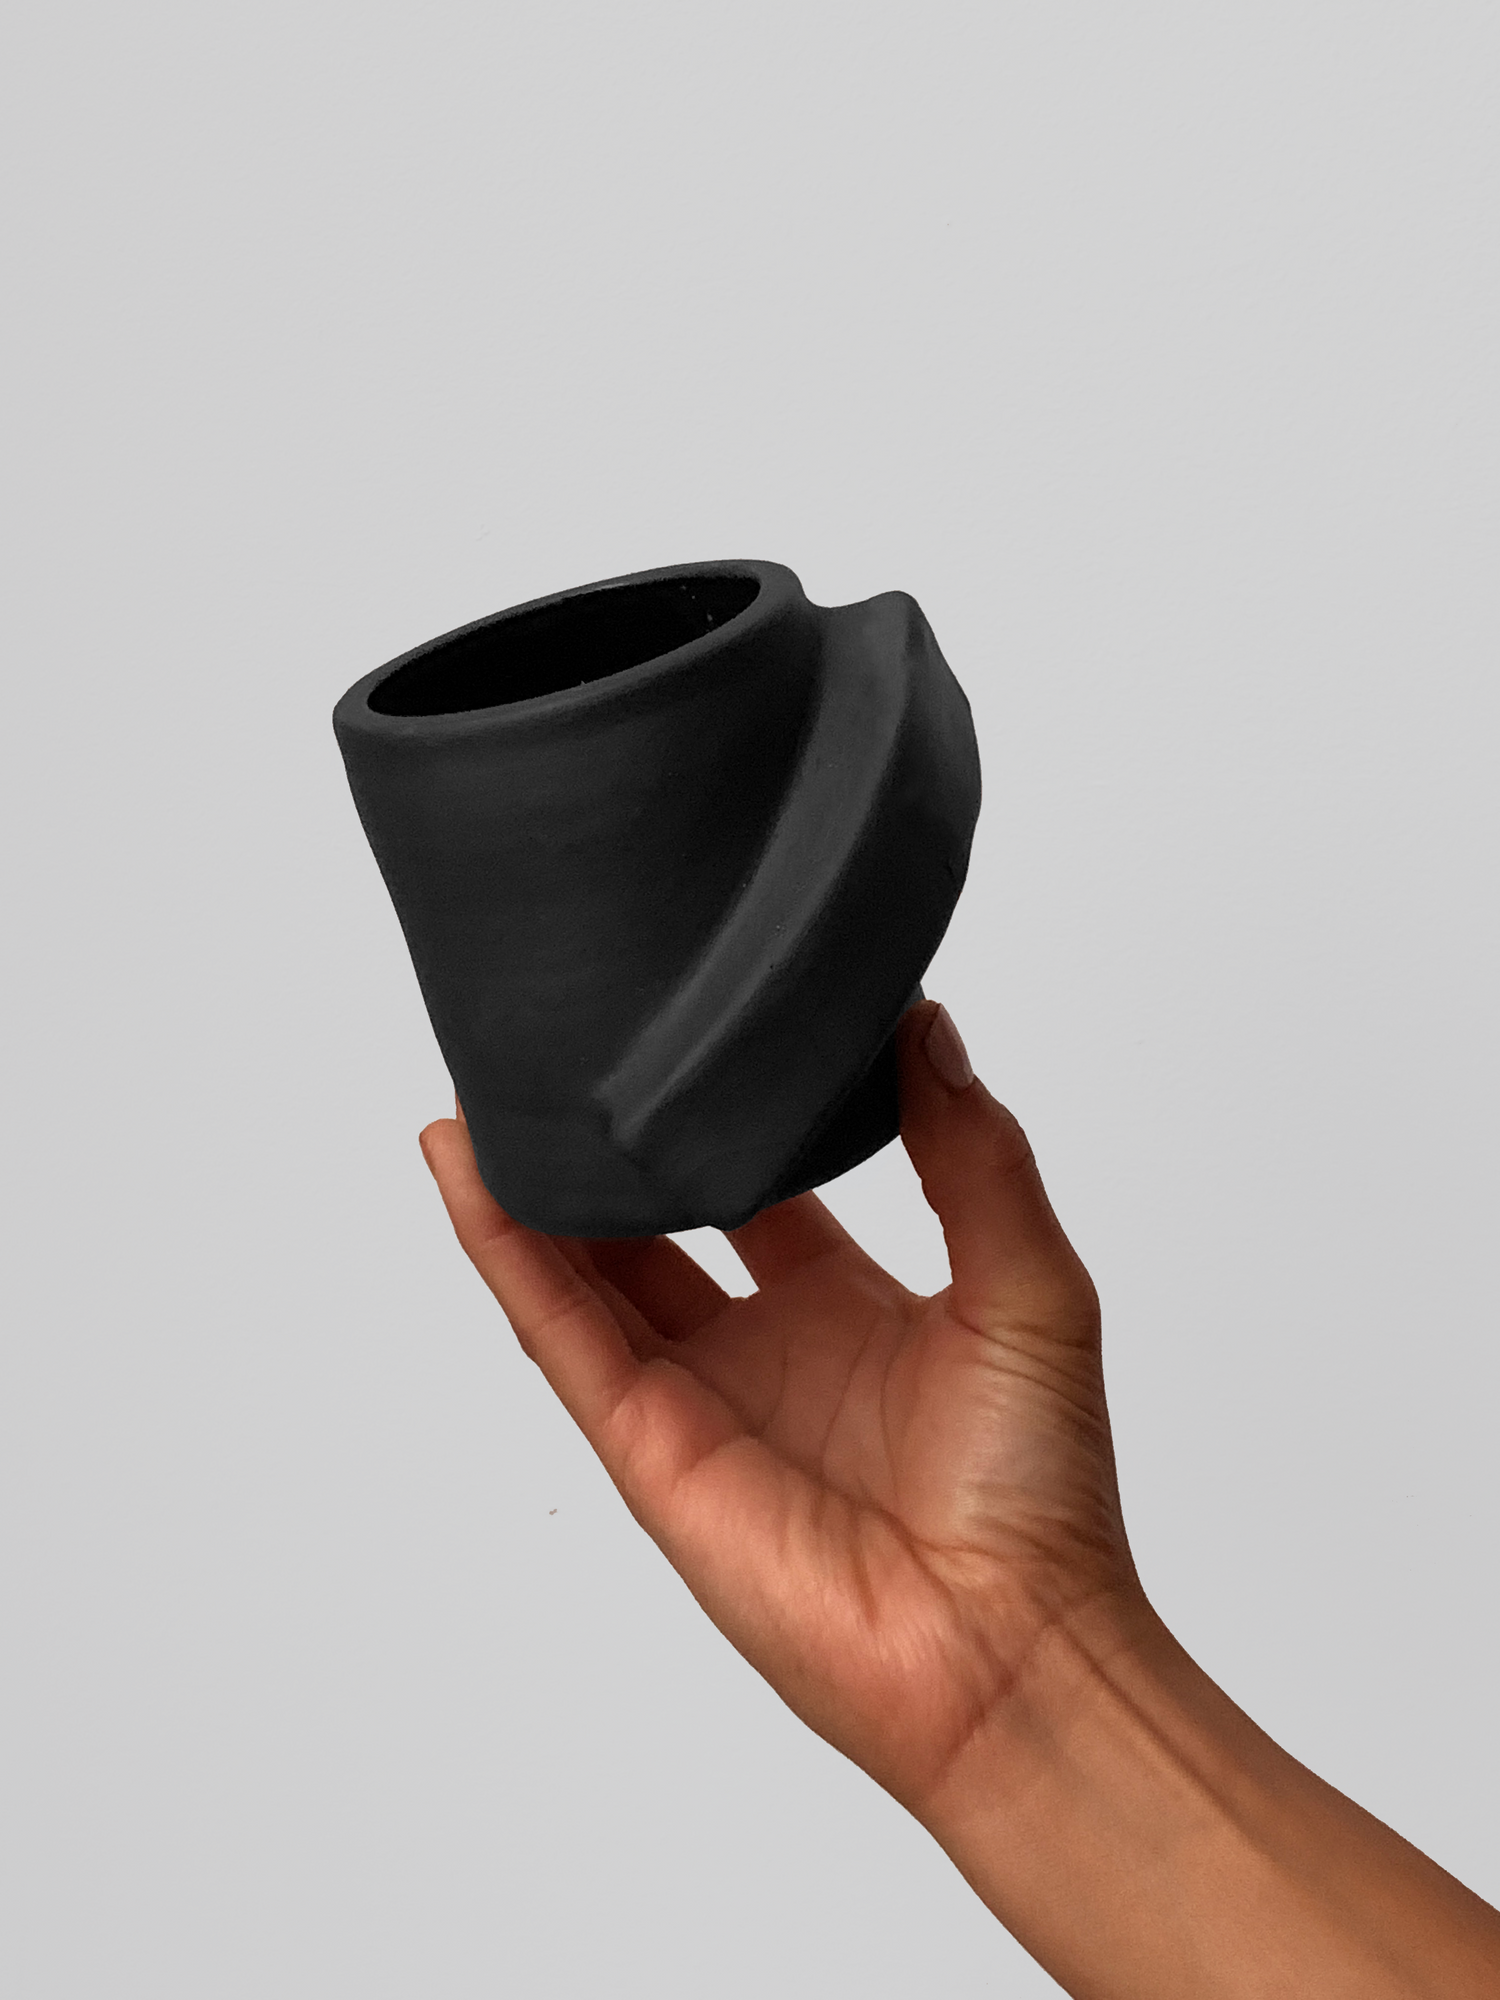 Black matte stoneware ceramic mug with thick sloped rectangle side handle.